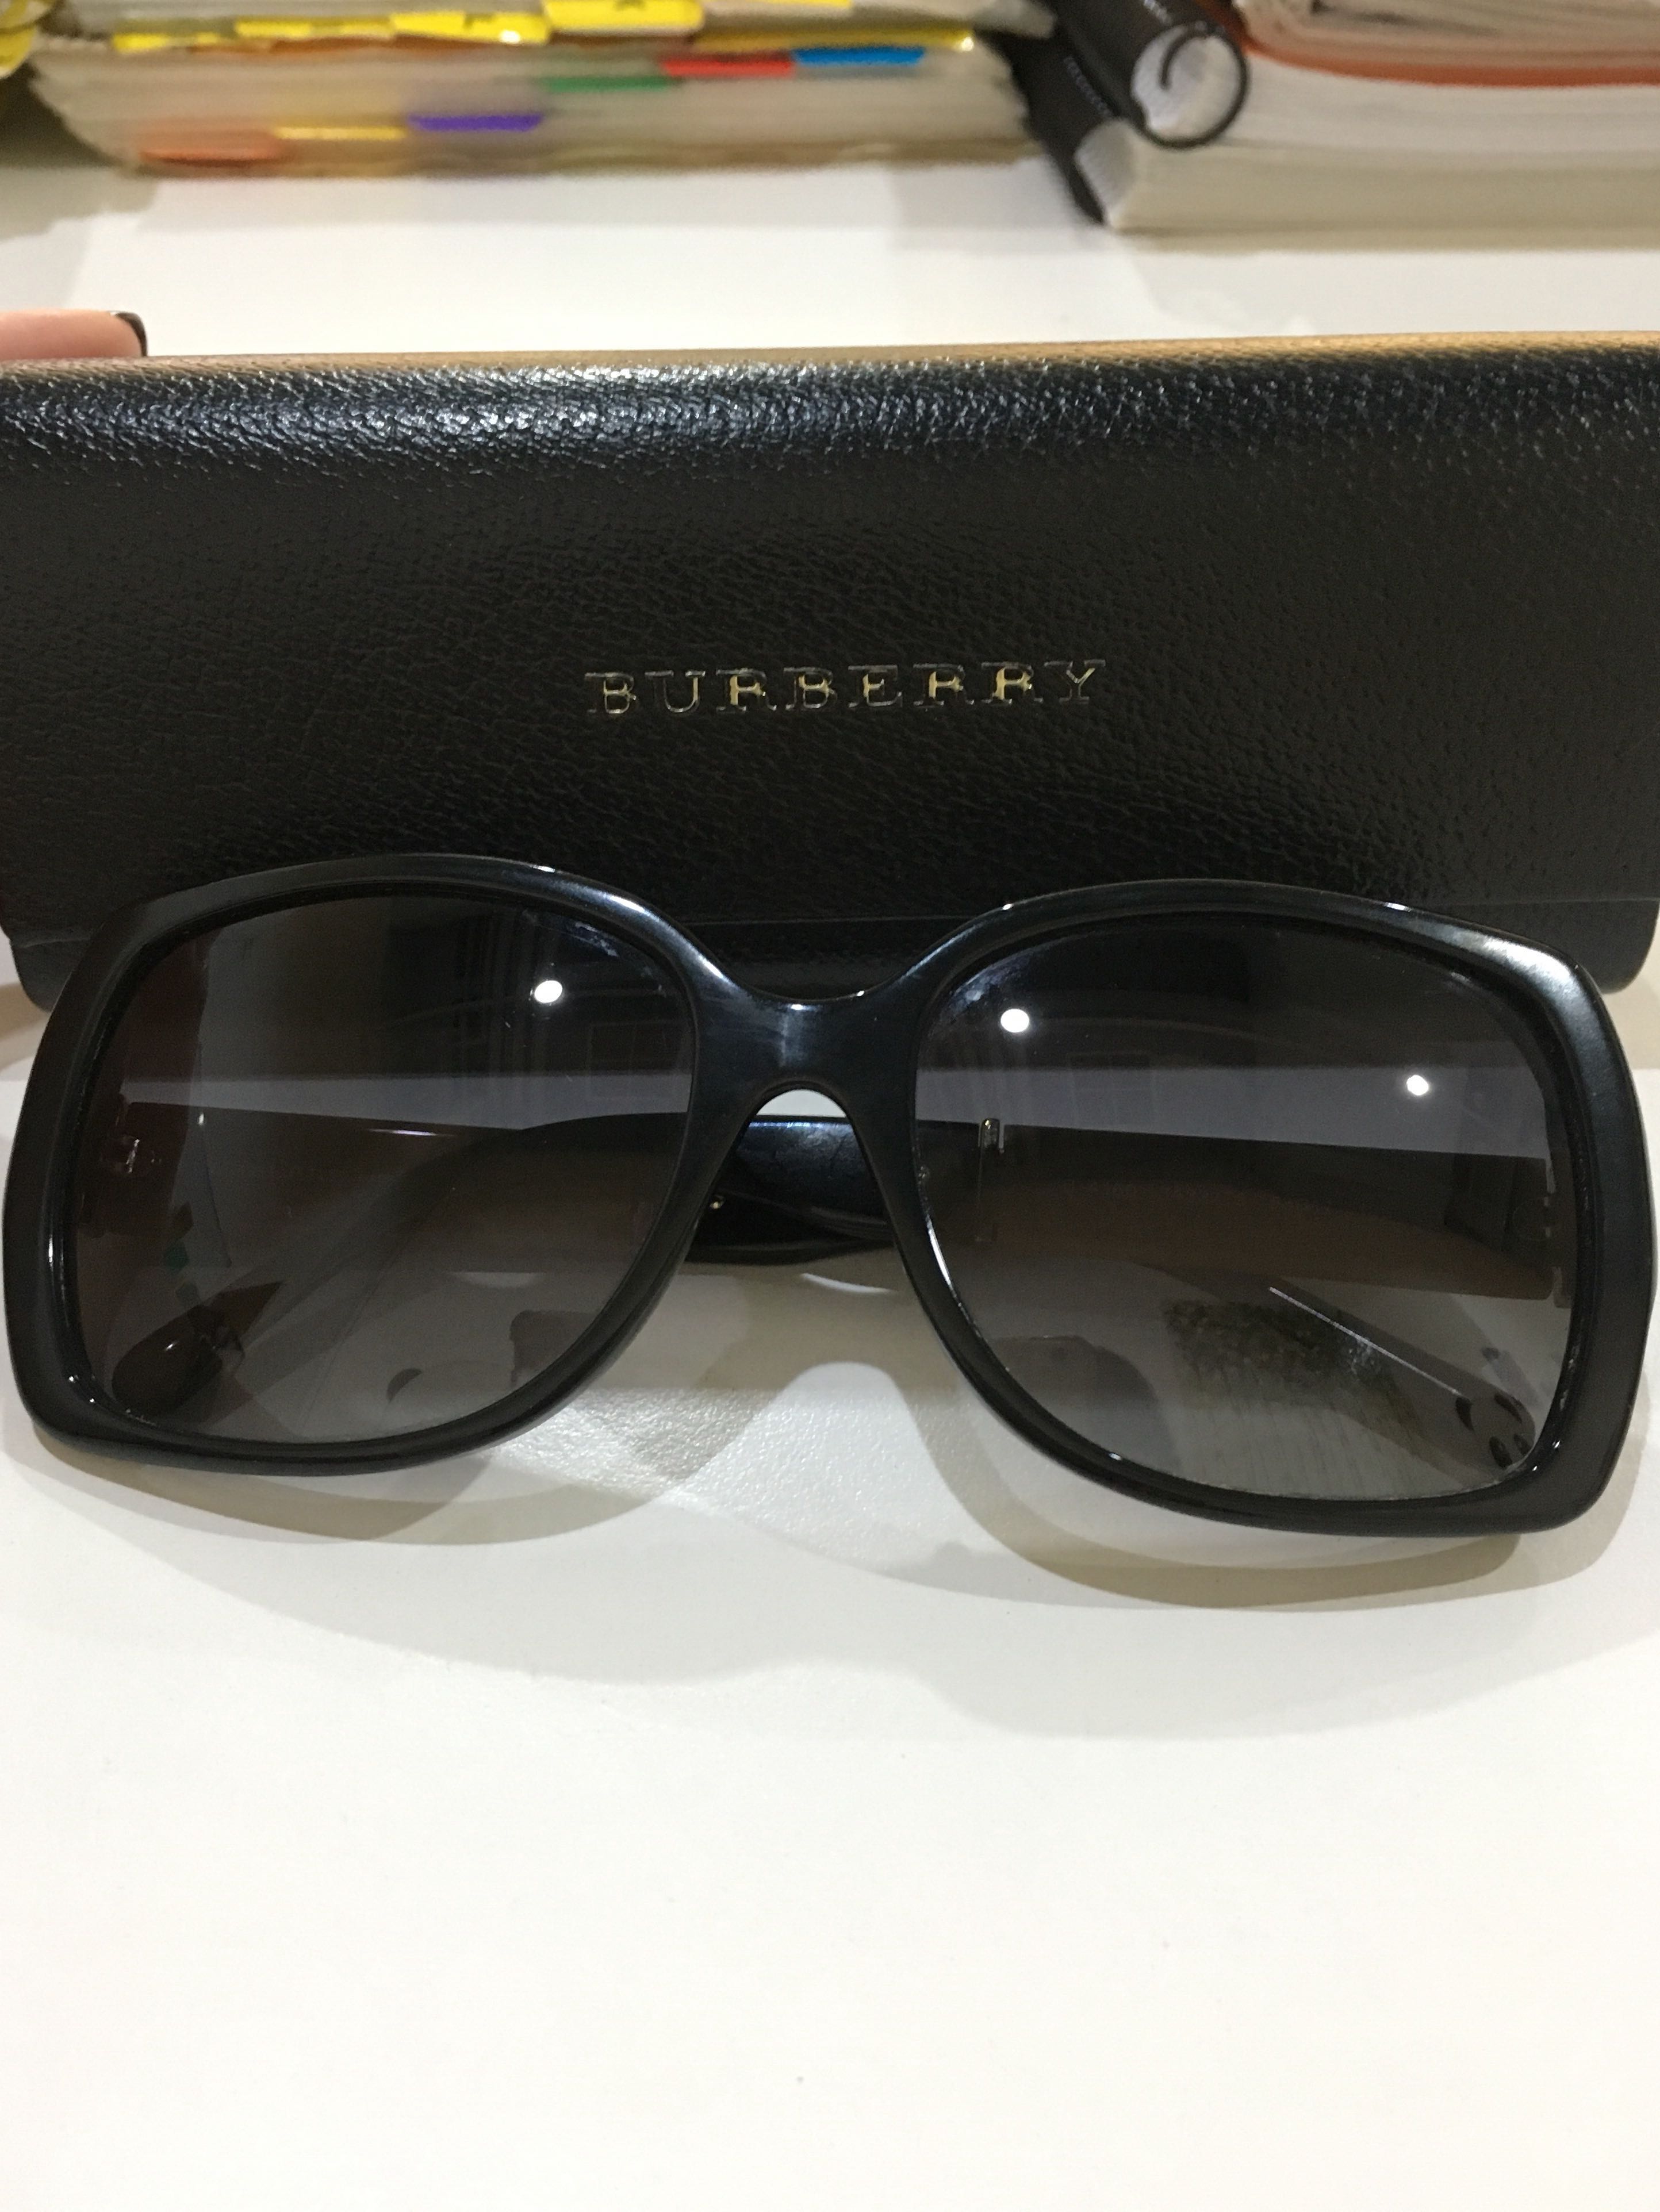 Authentic Burberry Polarized Sunglasses 